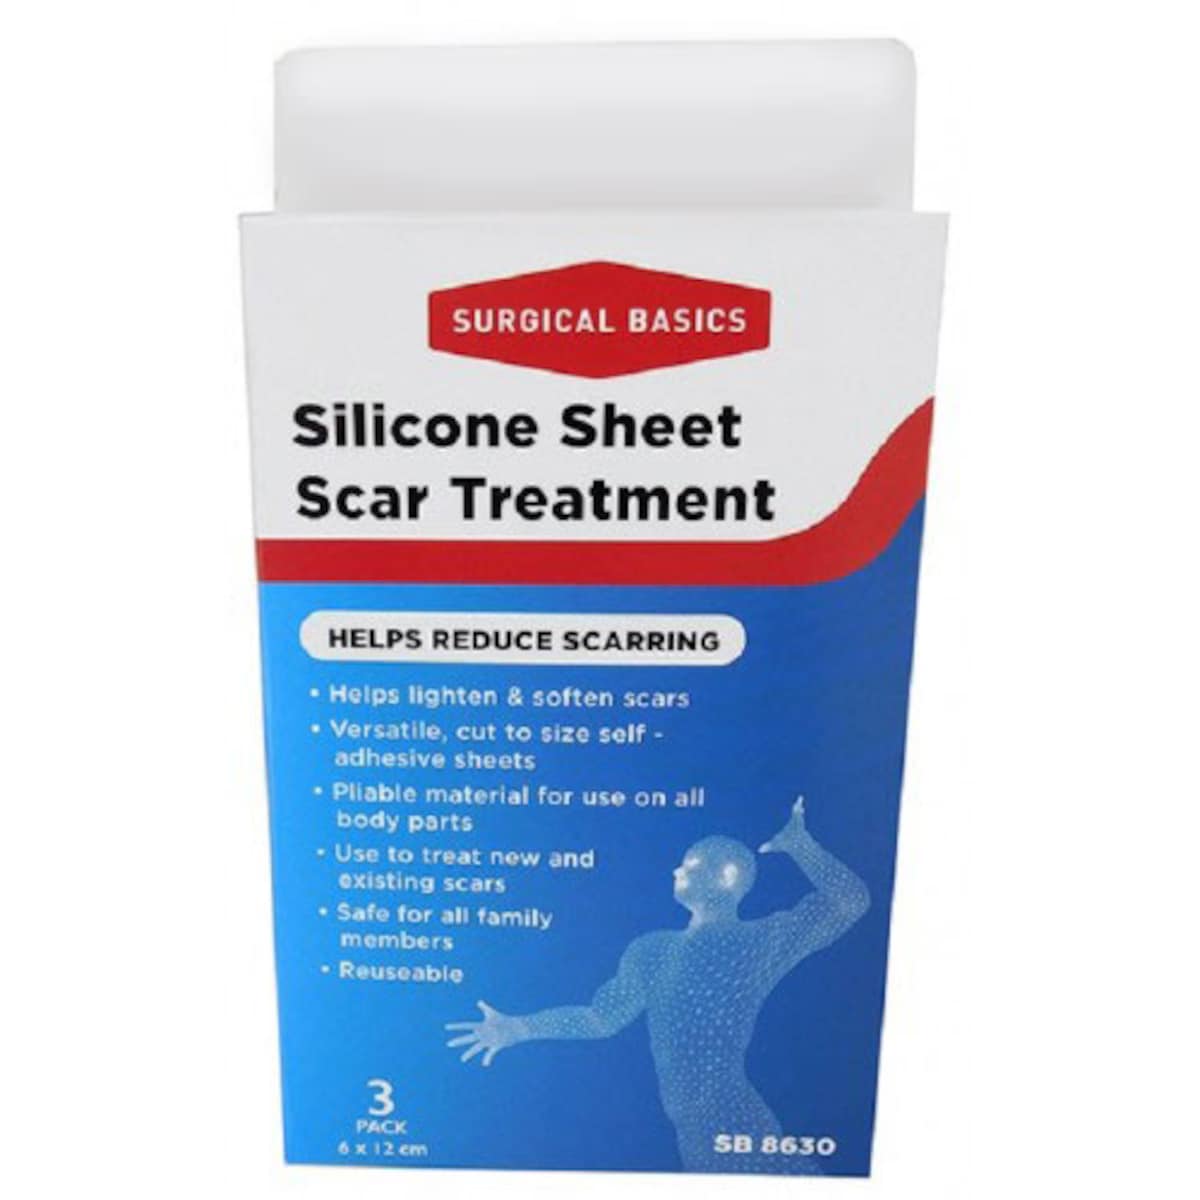 Surgical Basics Silicone Sheet Scar Treatment 6 x 12cm 3 Sheets